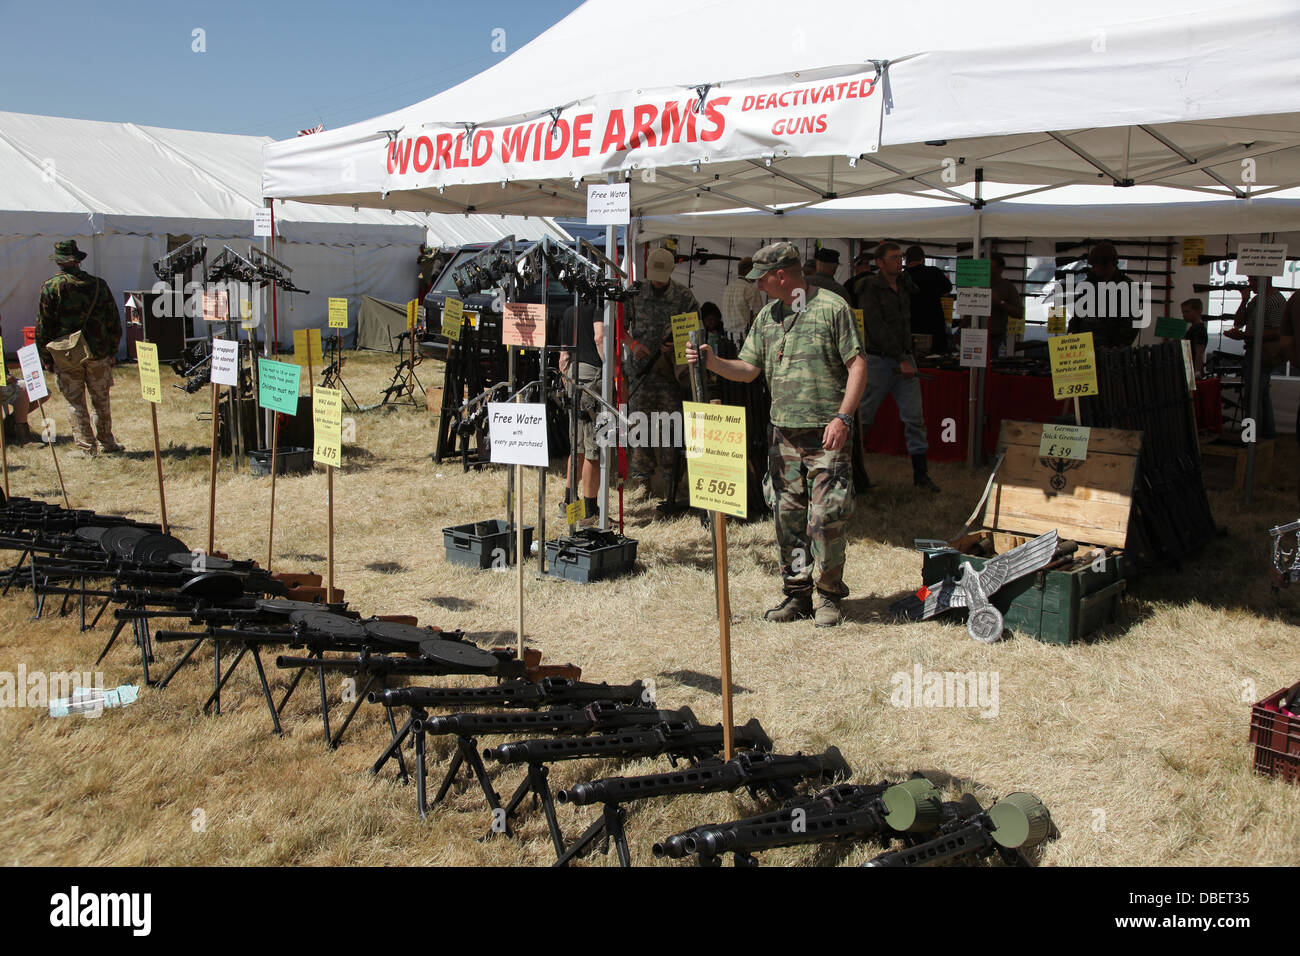 People looking at guns at a Military and Arms Fair Stock Photo